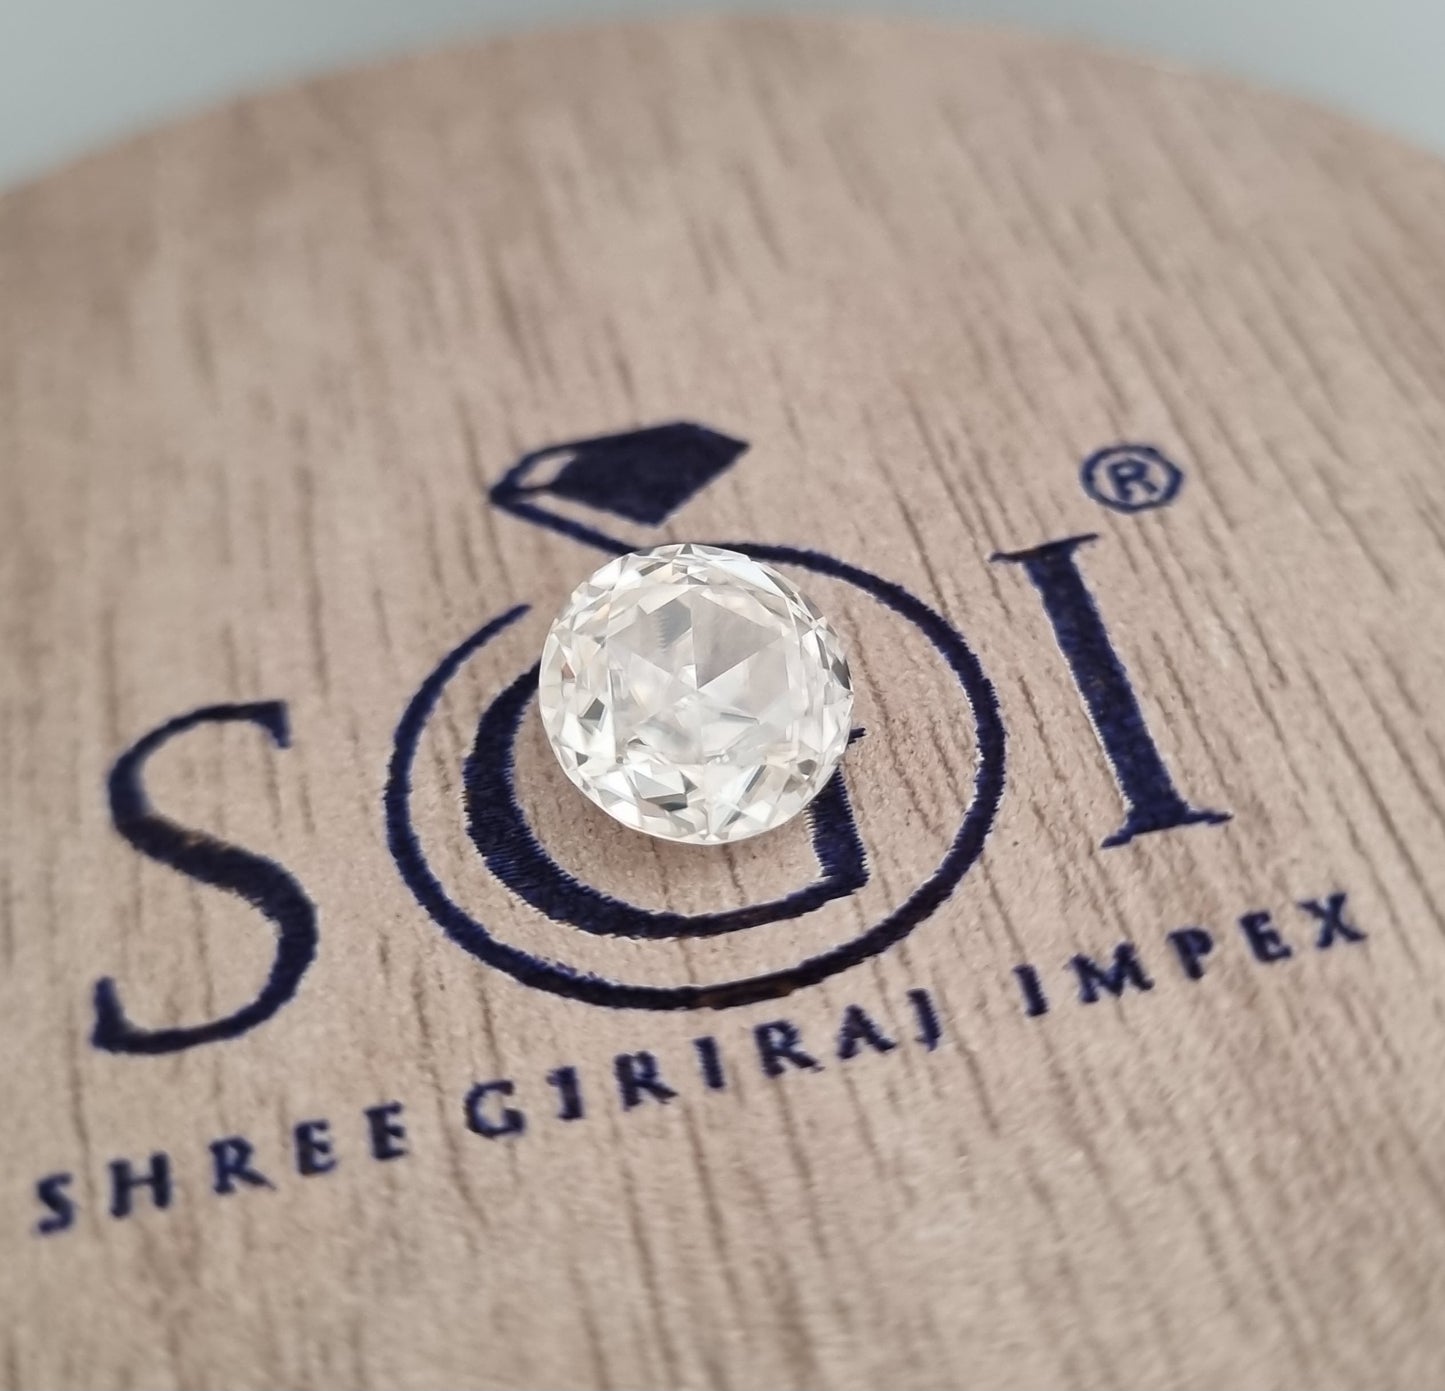 10mm White Round Rose Cut Moissanite Diamond For Jewellery Settings